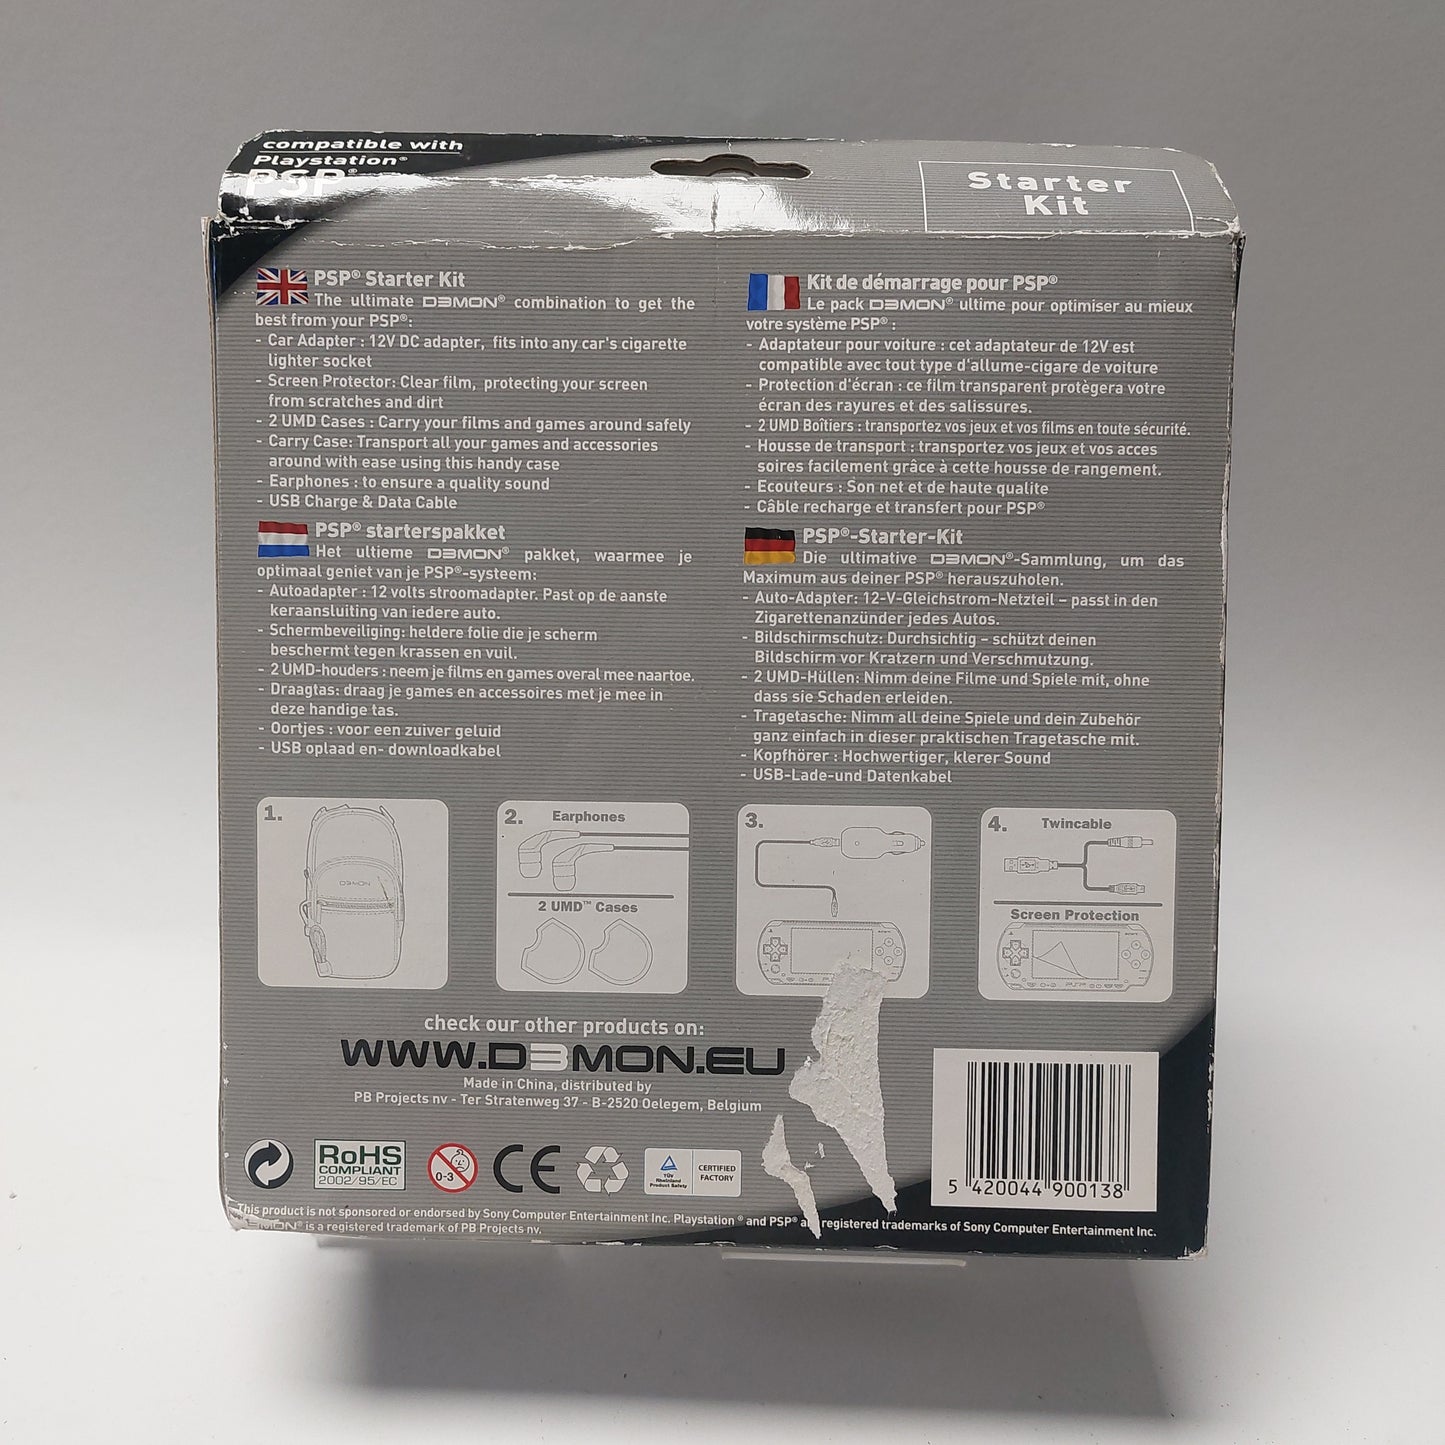 NEU Kompatibel mit dem Playstation PSP Starter Kit